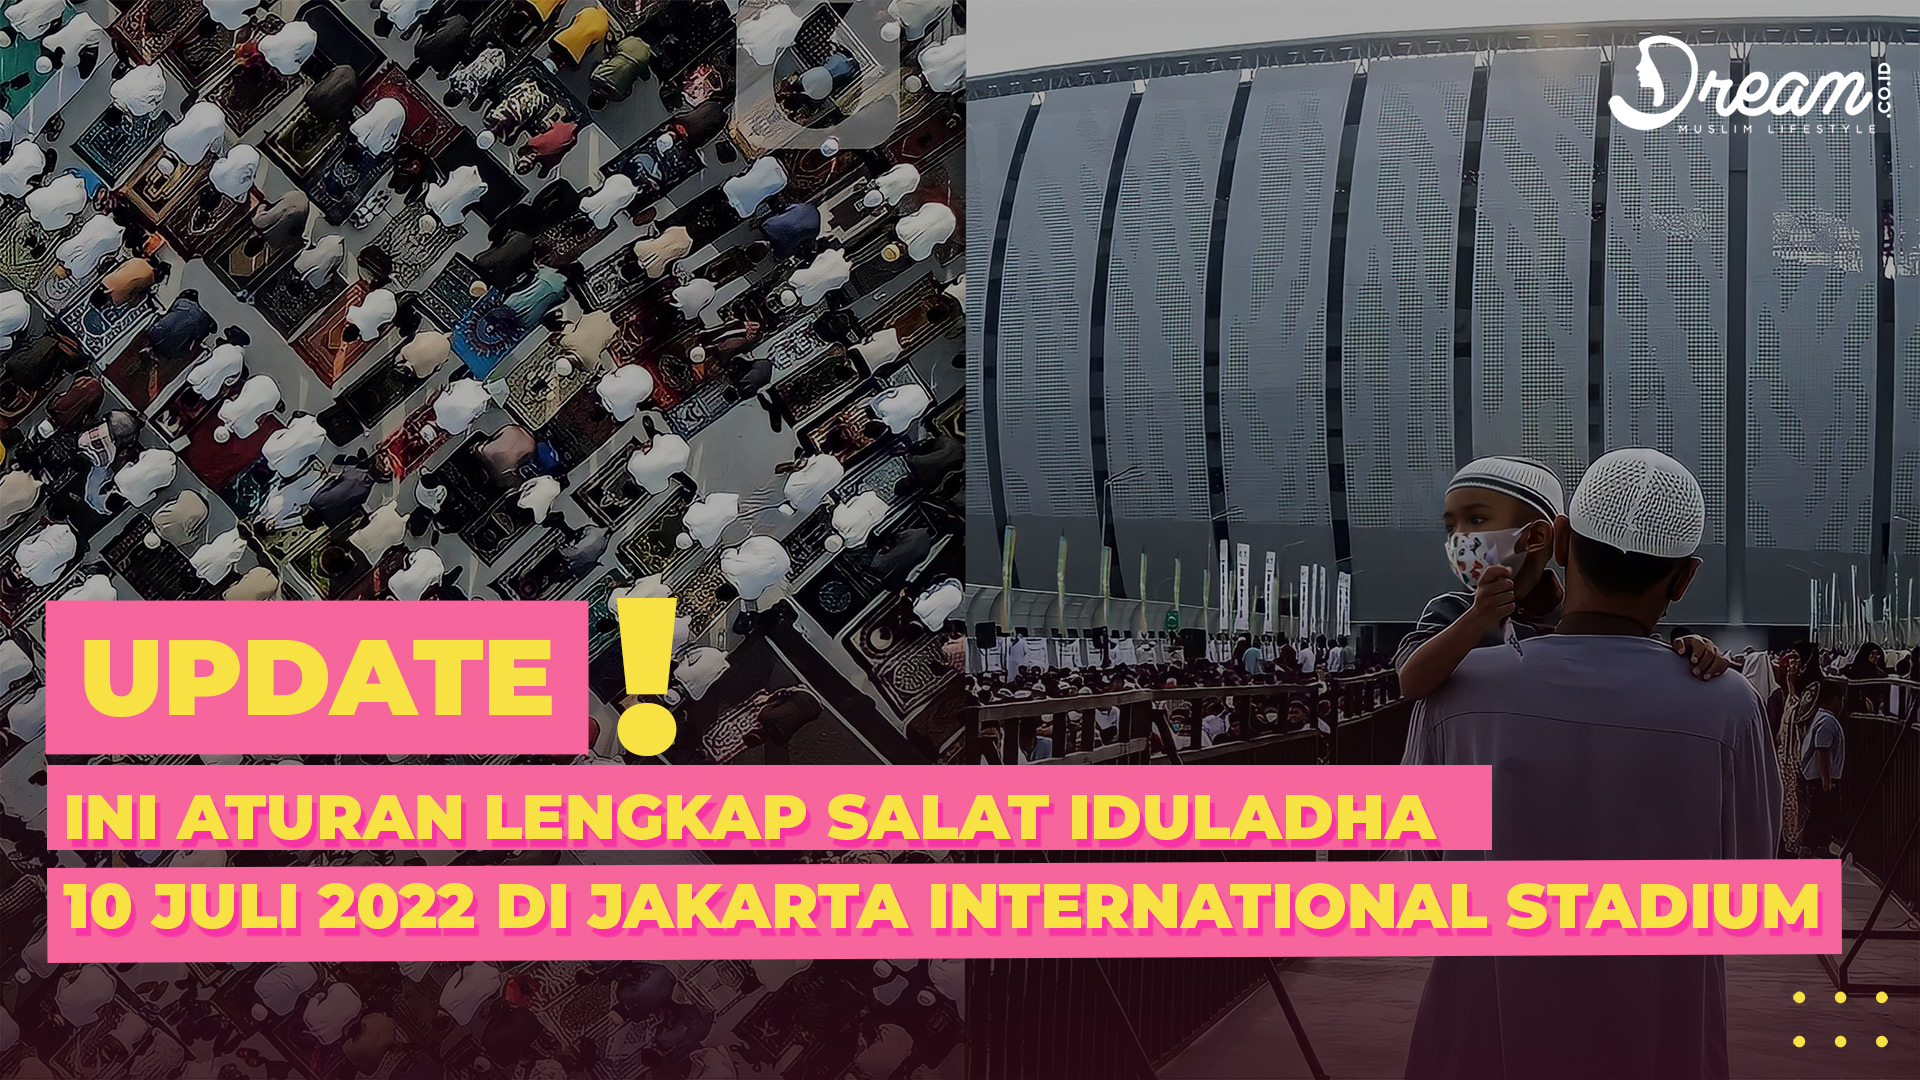 Ini Aturan Lengkap Salat Idul Adha 10 Juli 2022 di Jakarta International Stadium